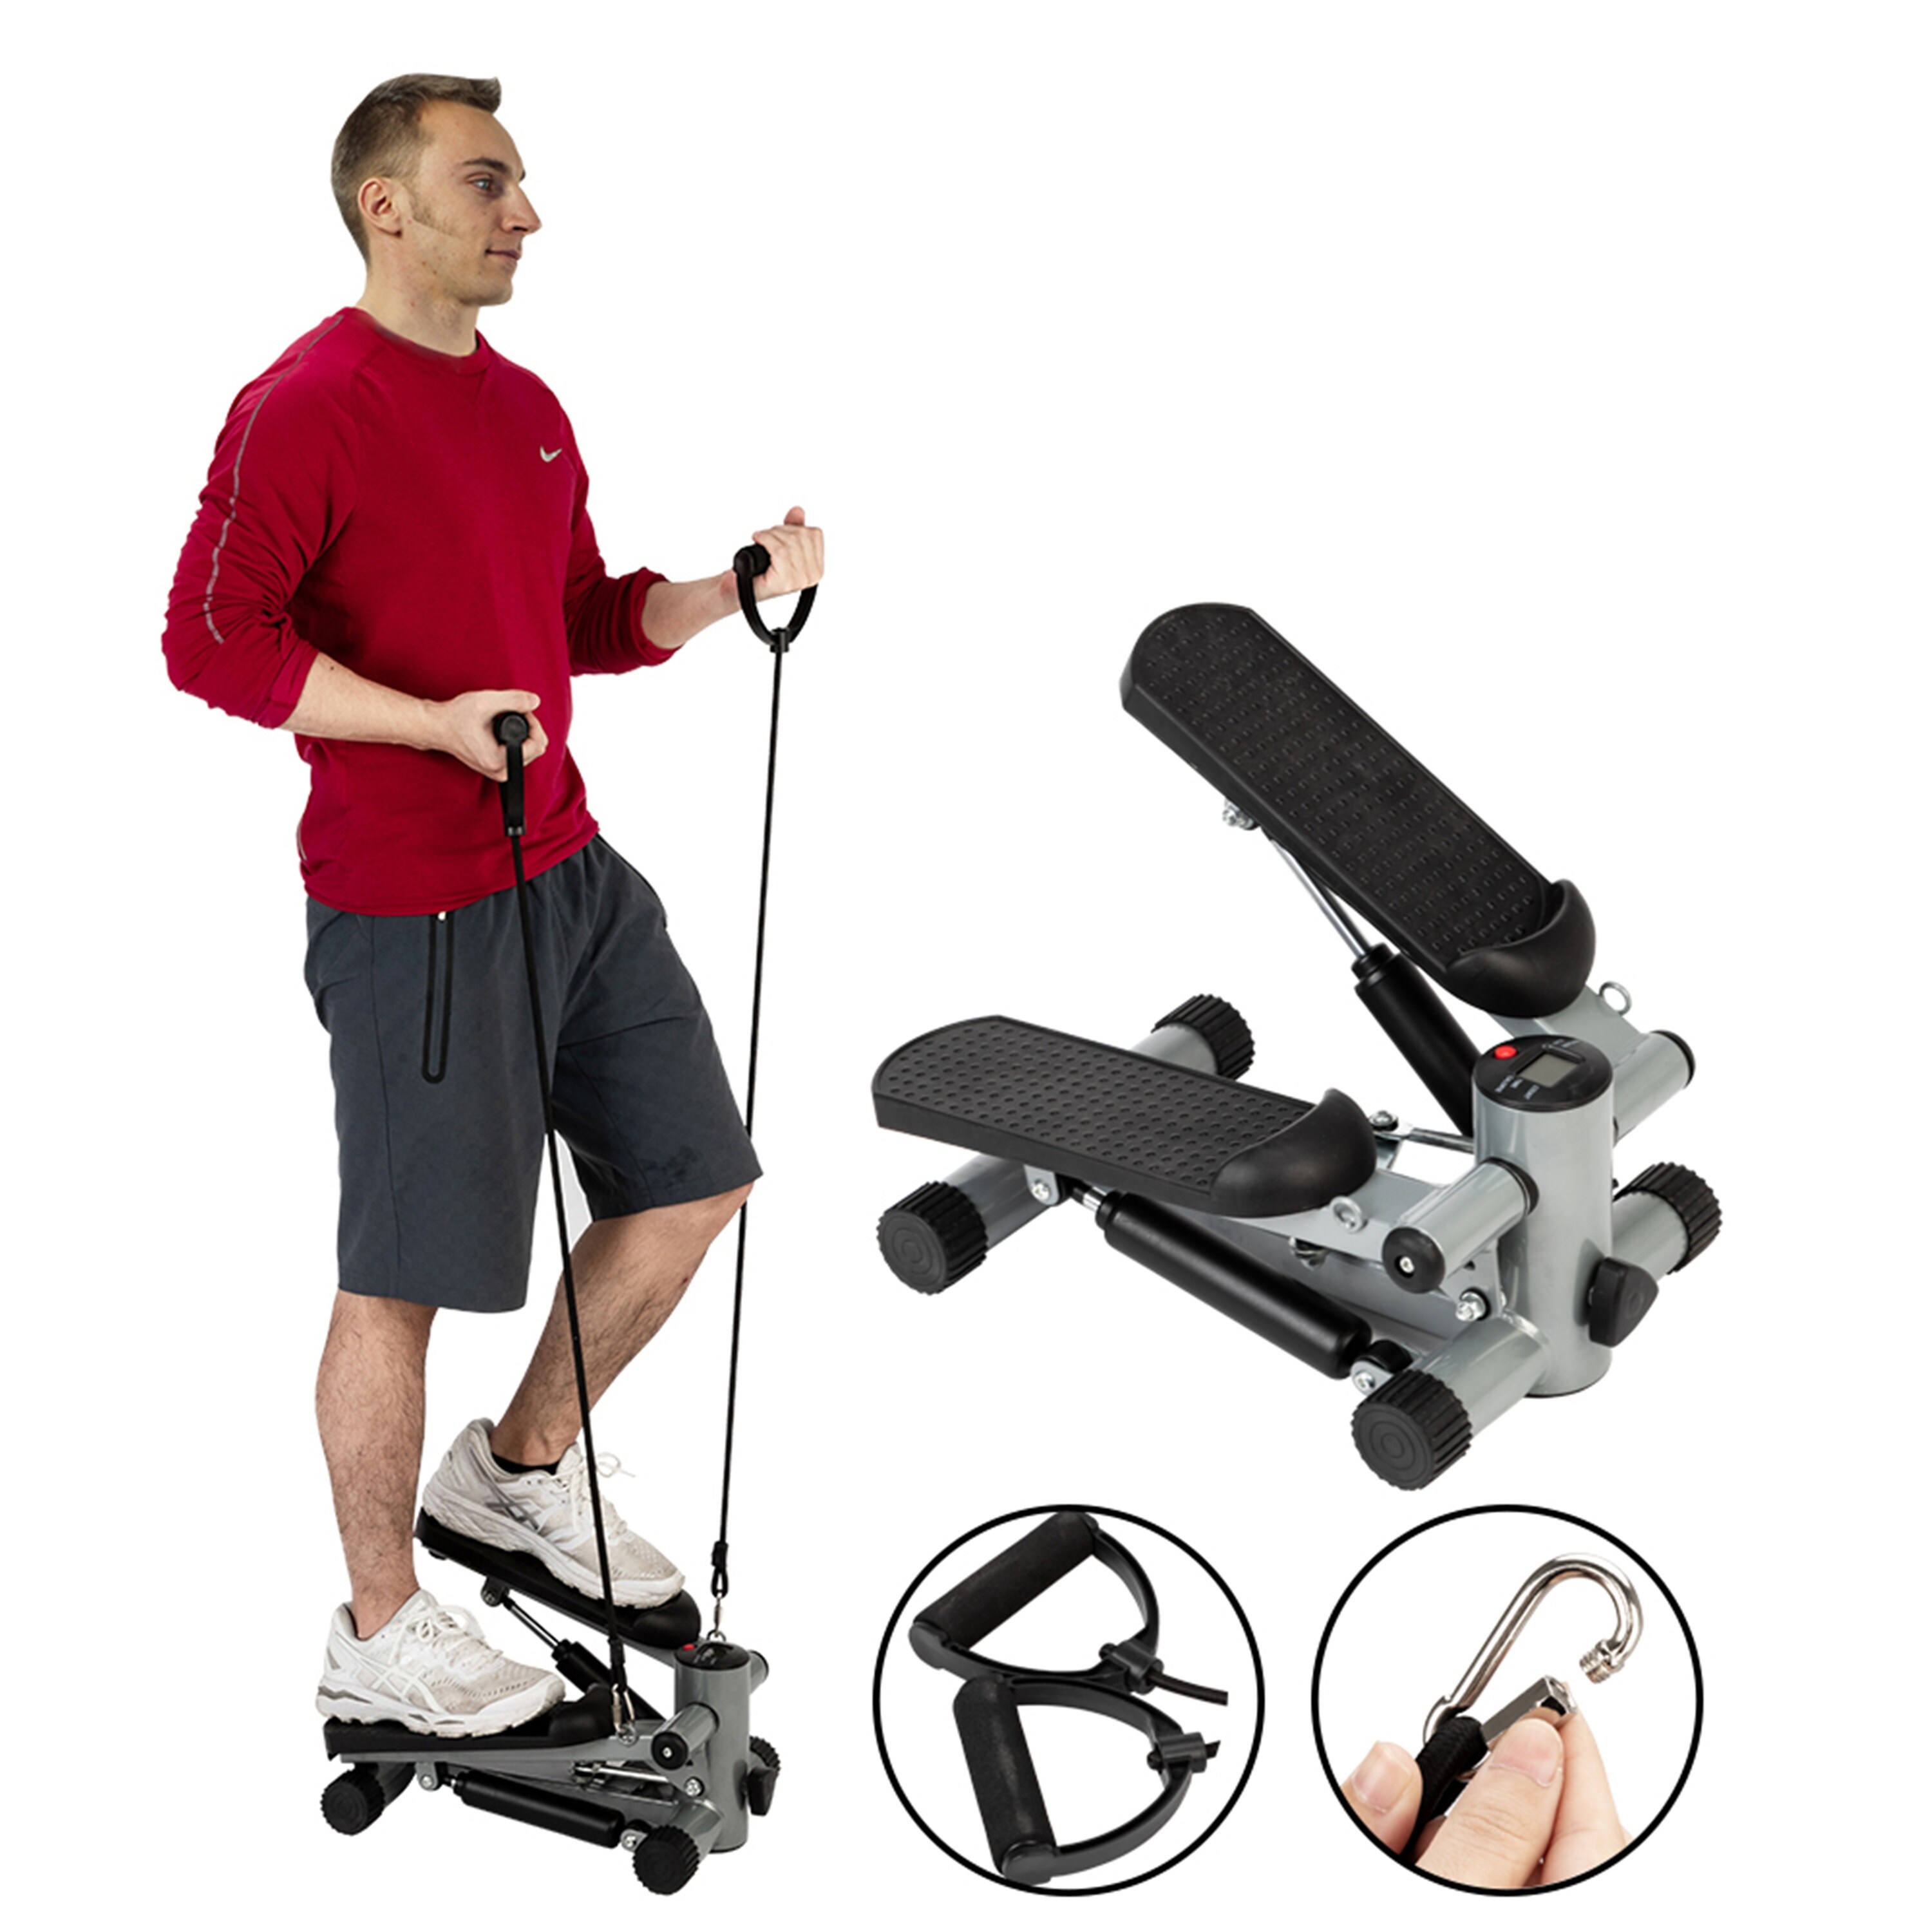 aerobic exercise equipment